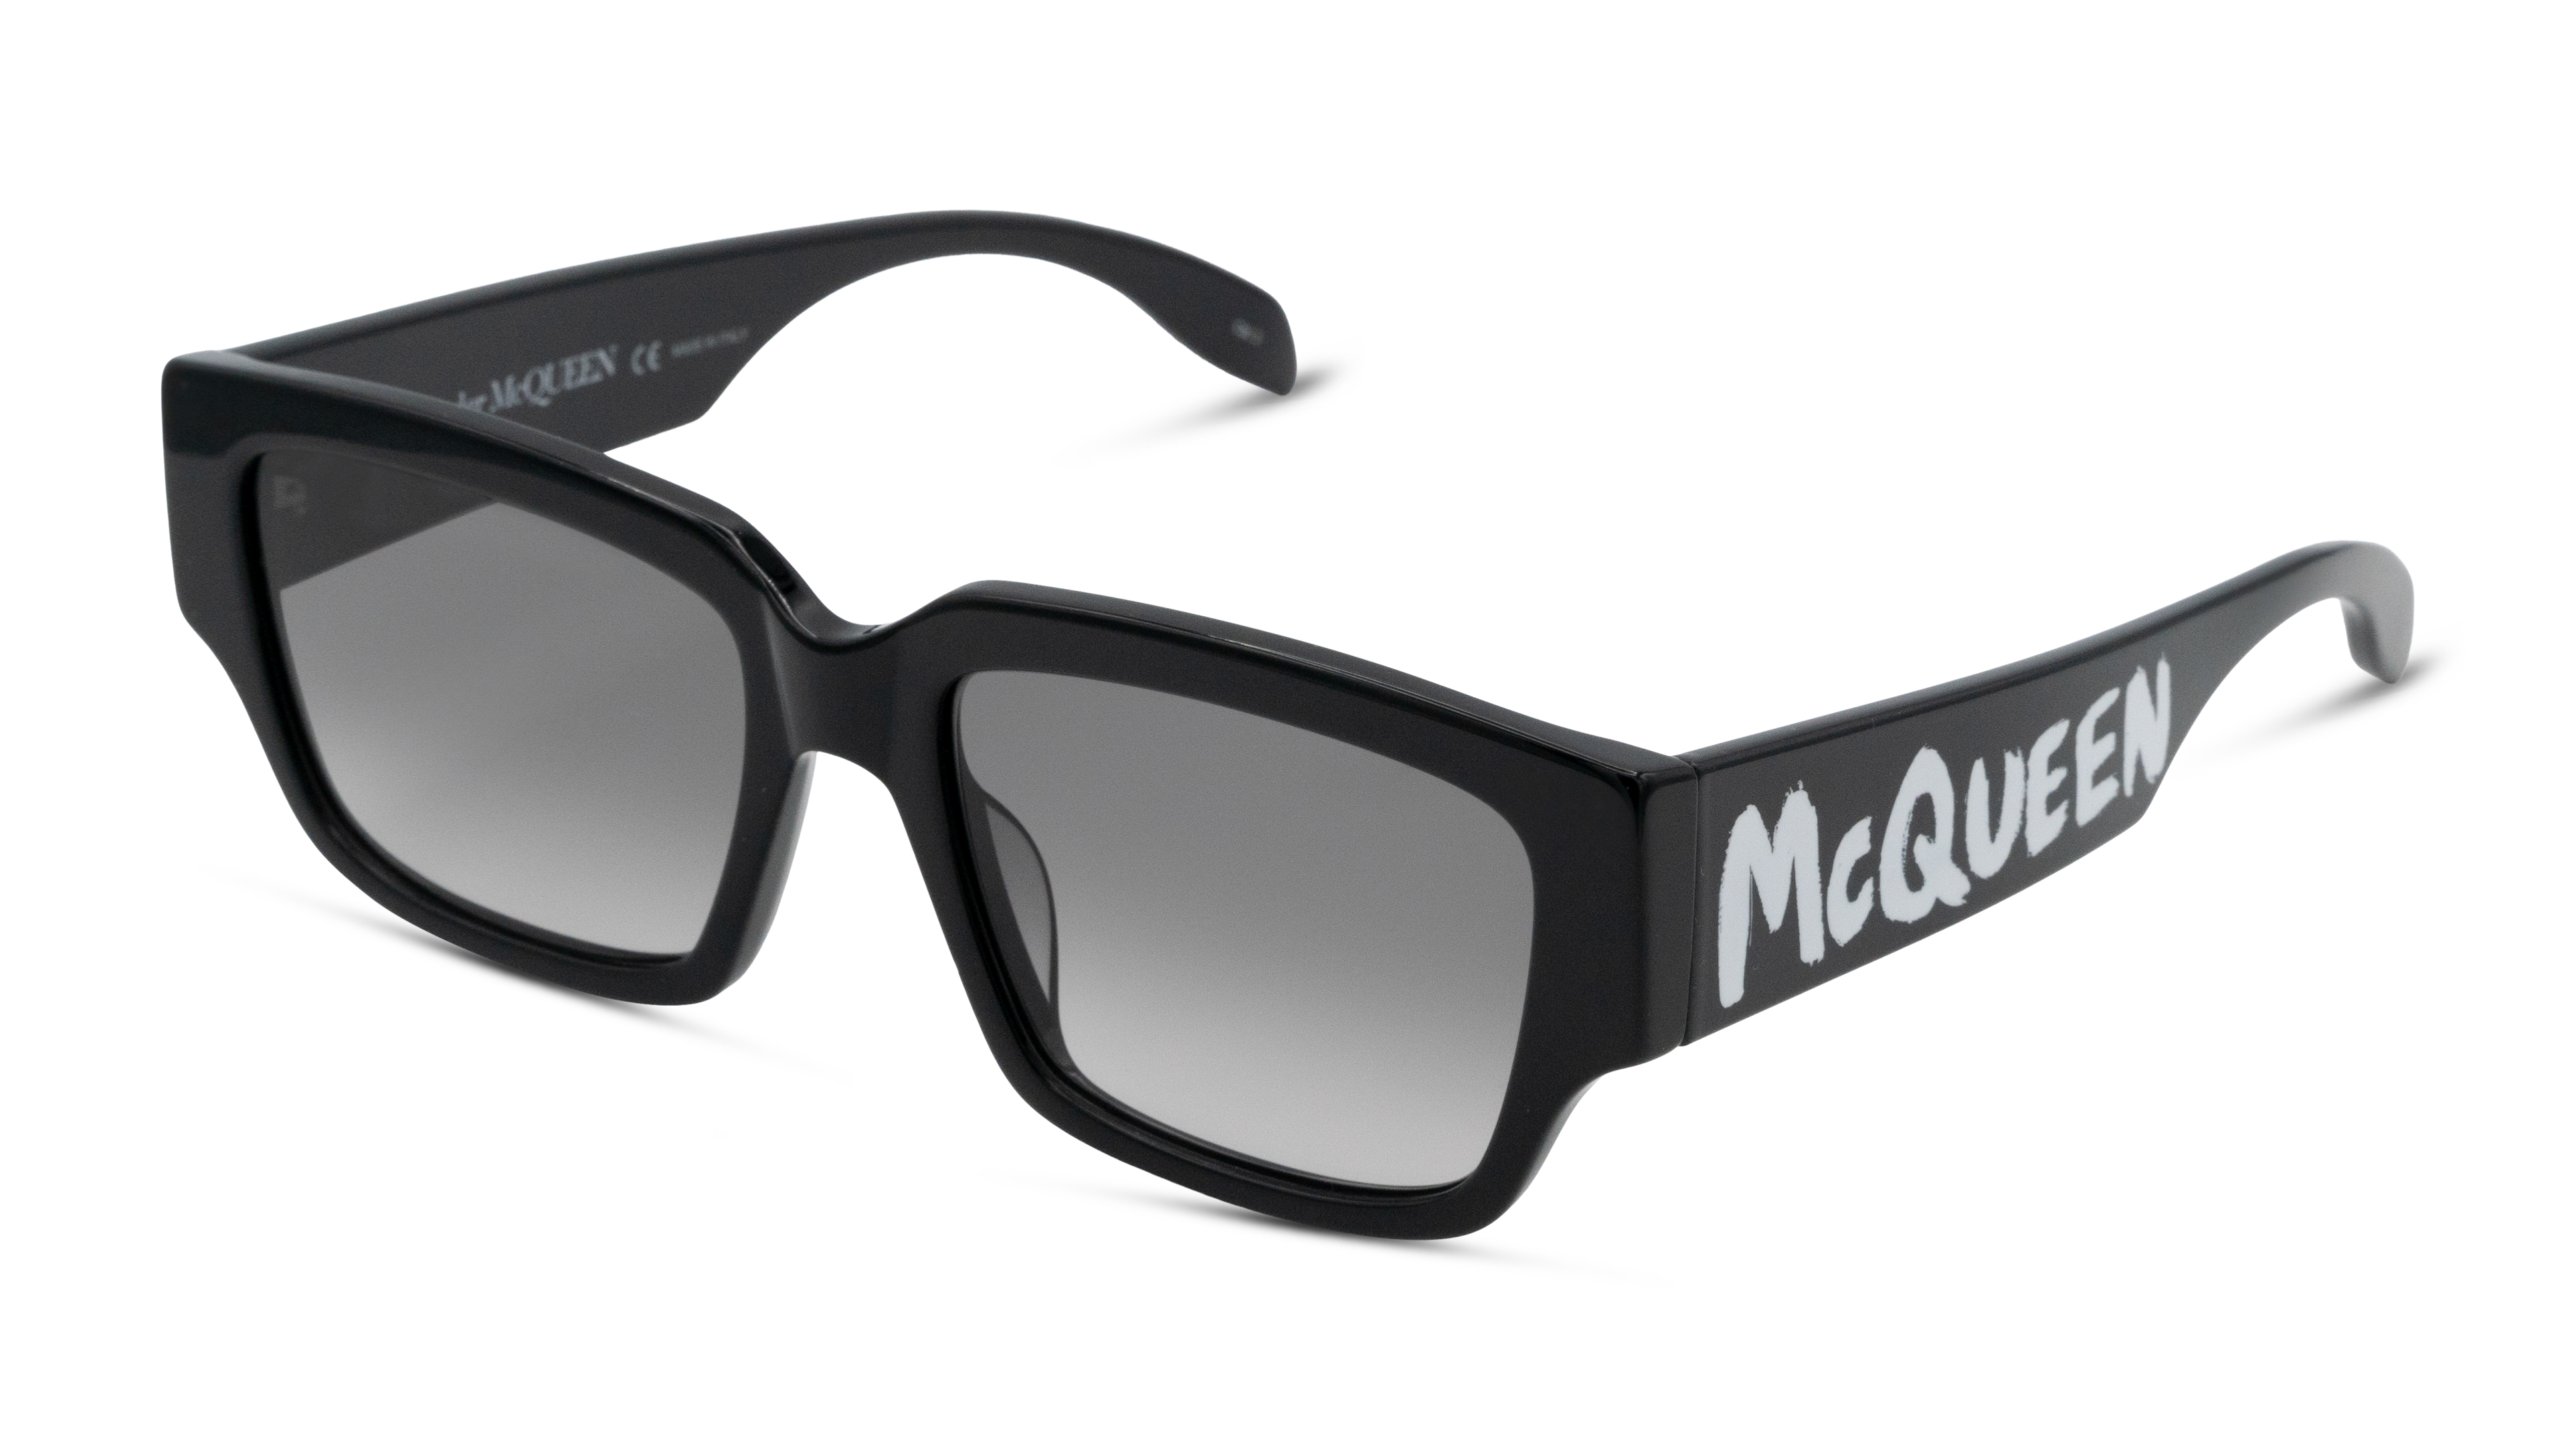 Angle_Left01 Alexander McQueen AM 0329S (001) Sunglasses Grey / Black